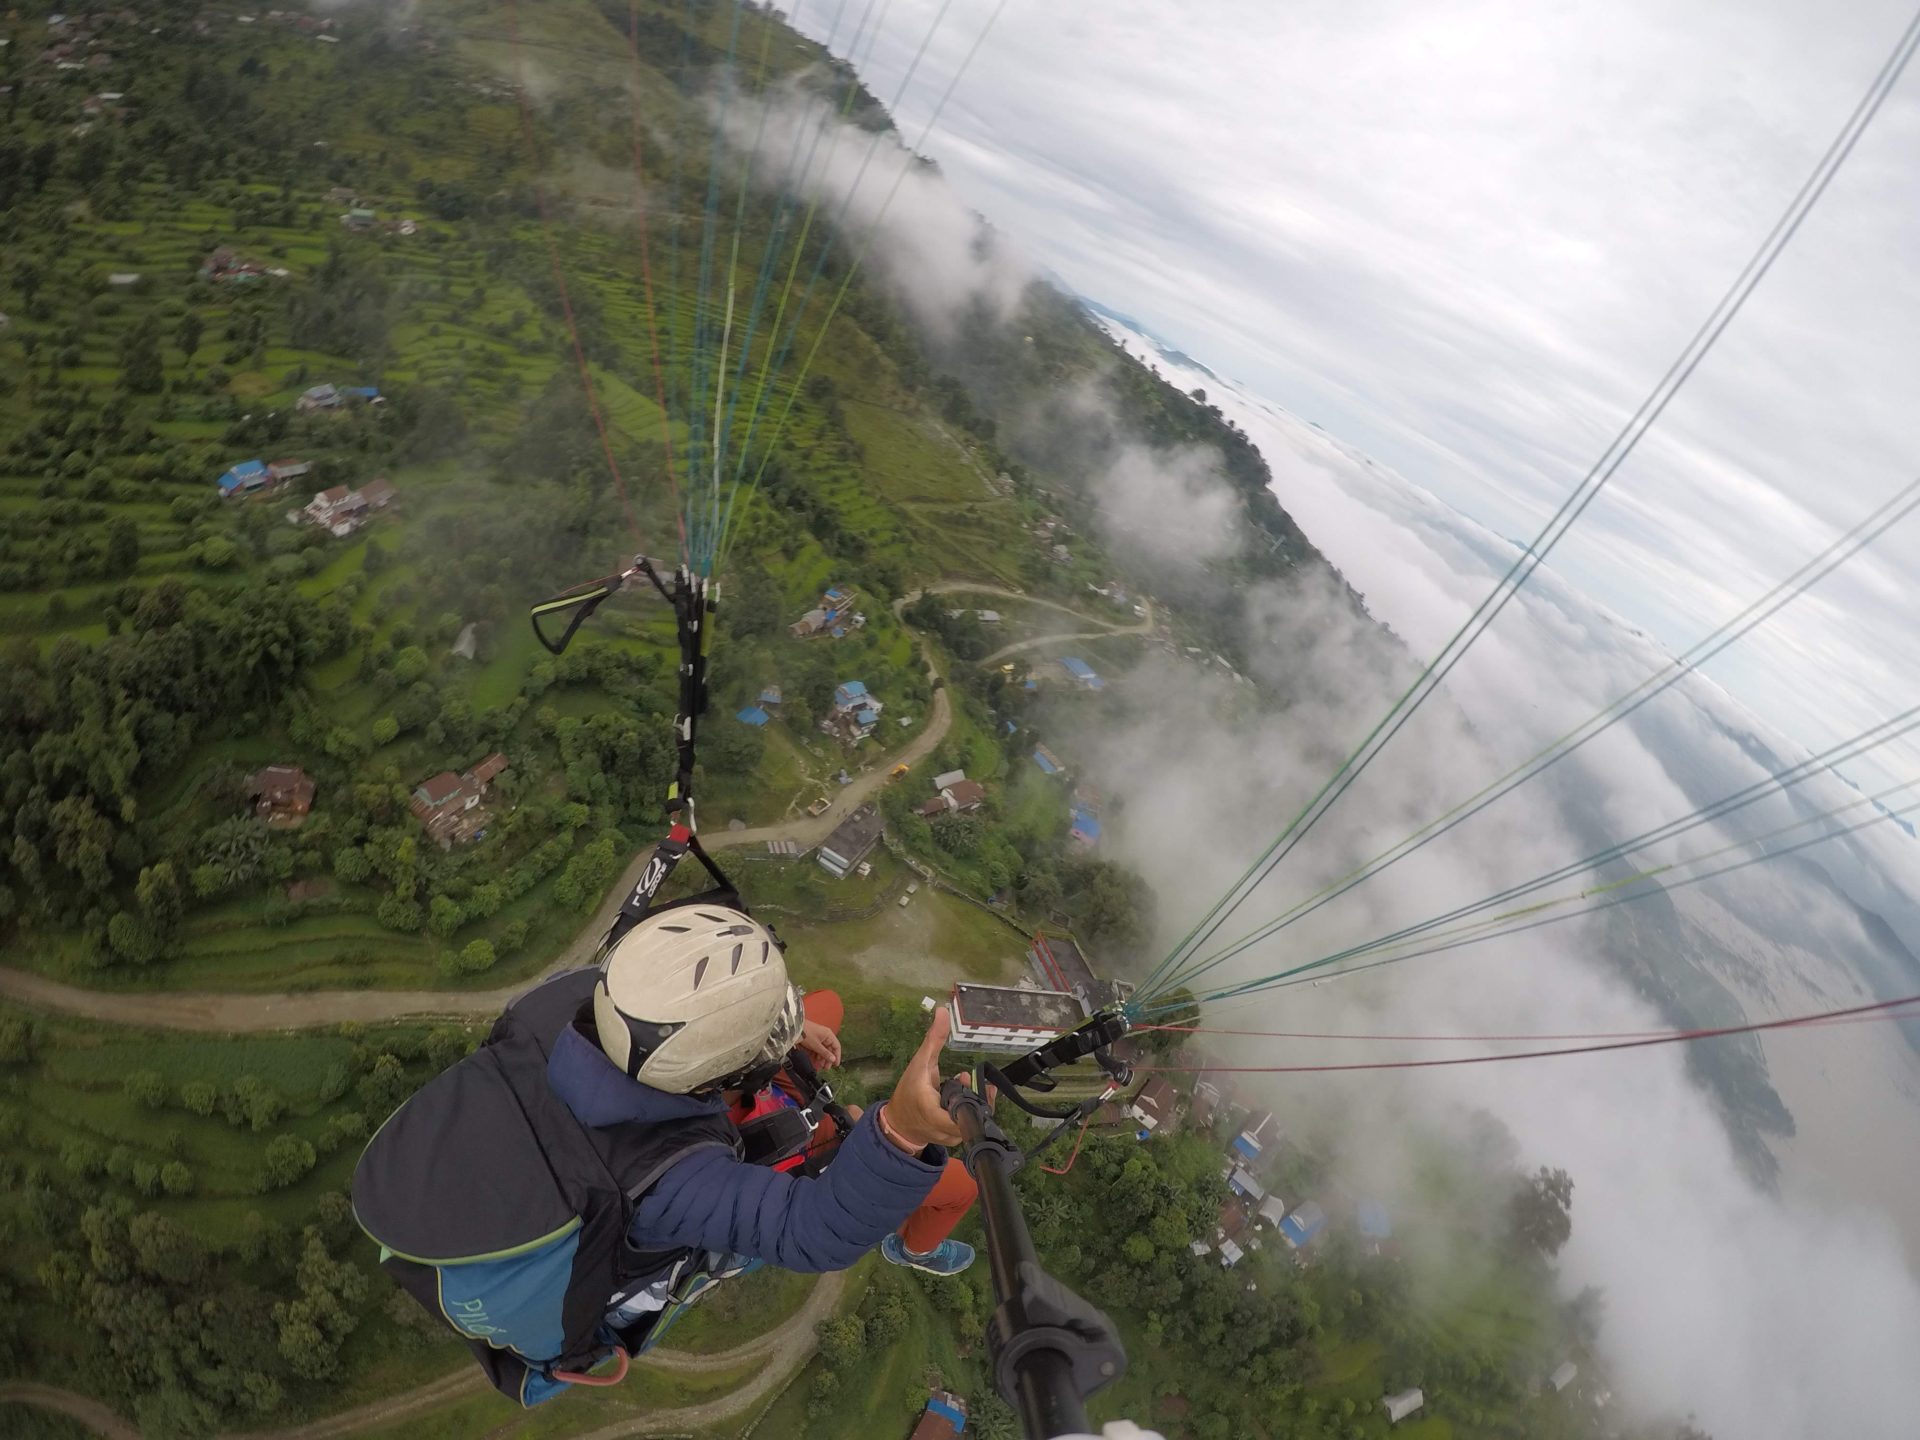 a person paragliding over a valley